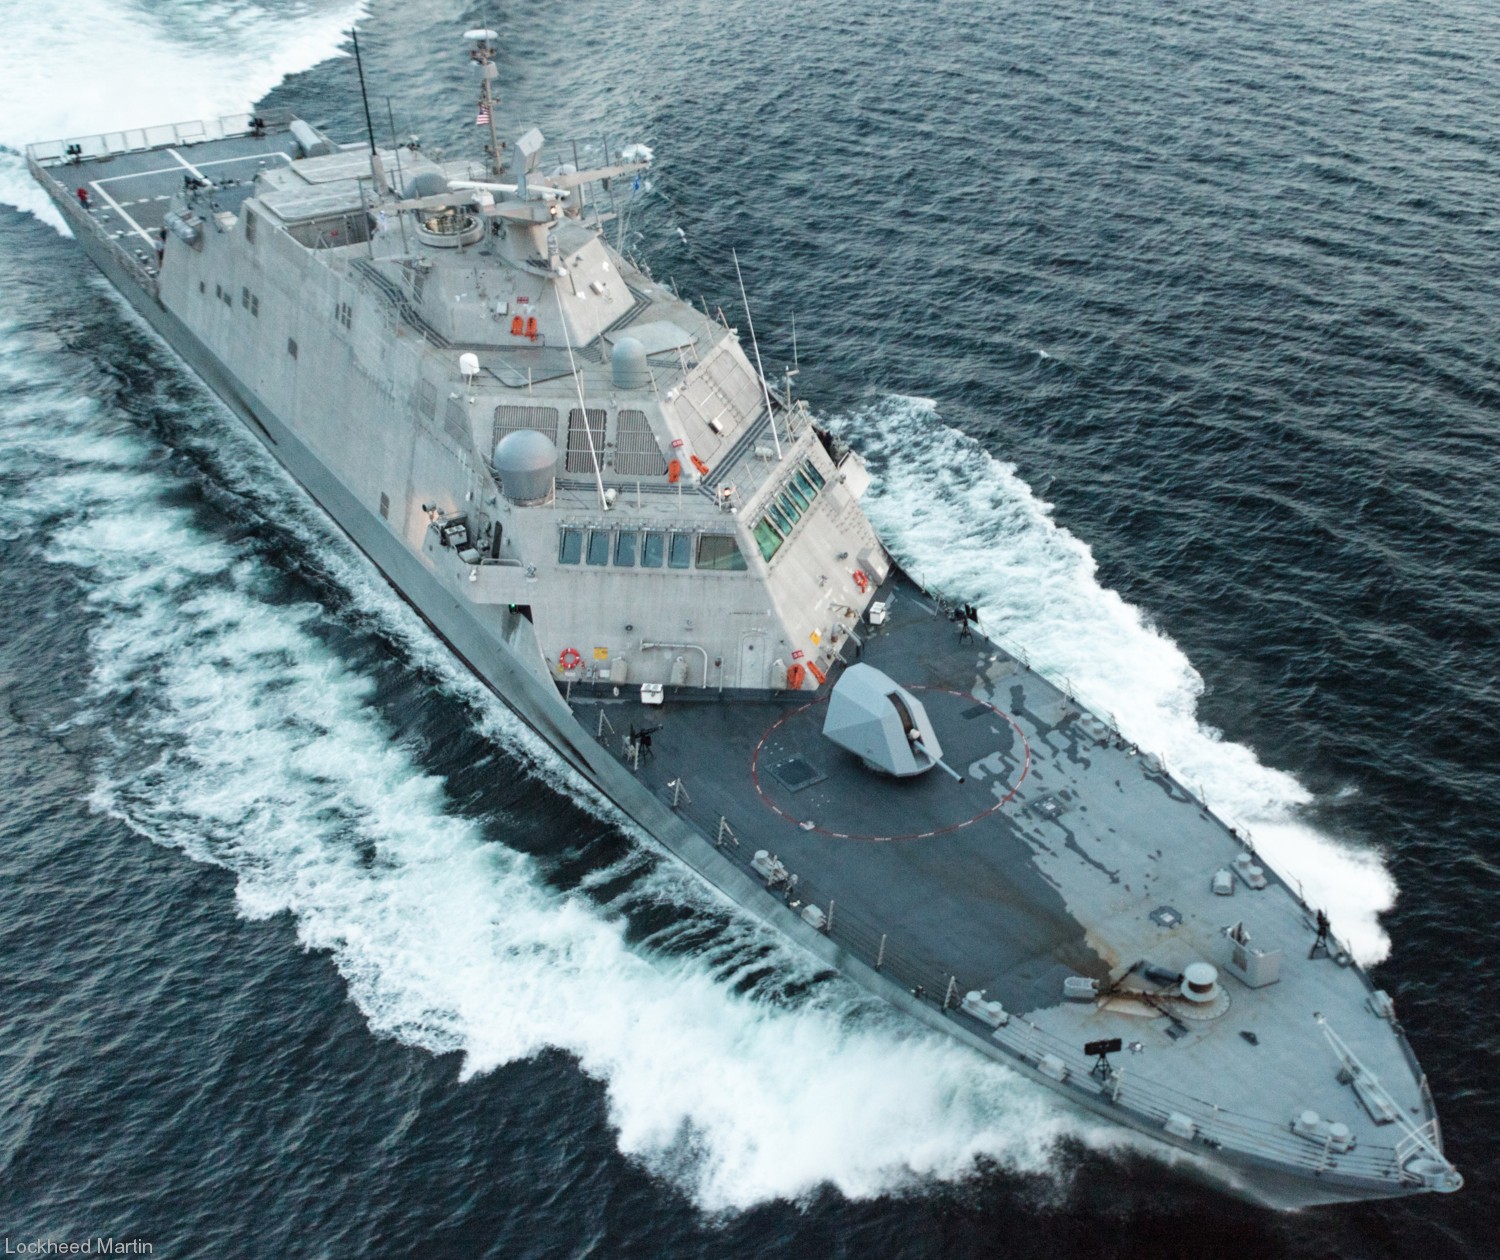 lcs-9 uss little rock freedom class littoral combat ship us navy 11